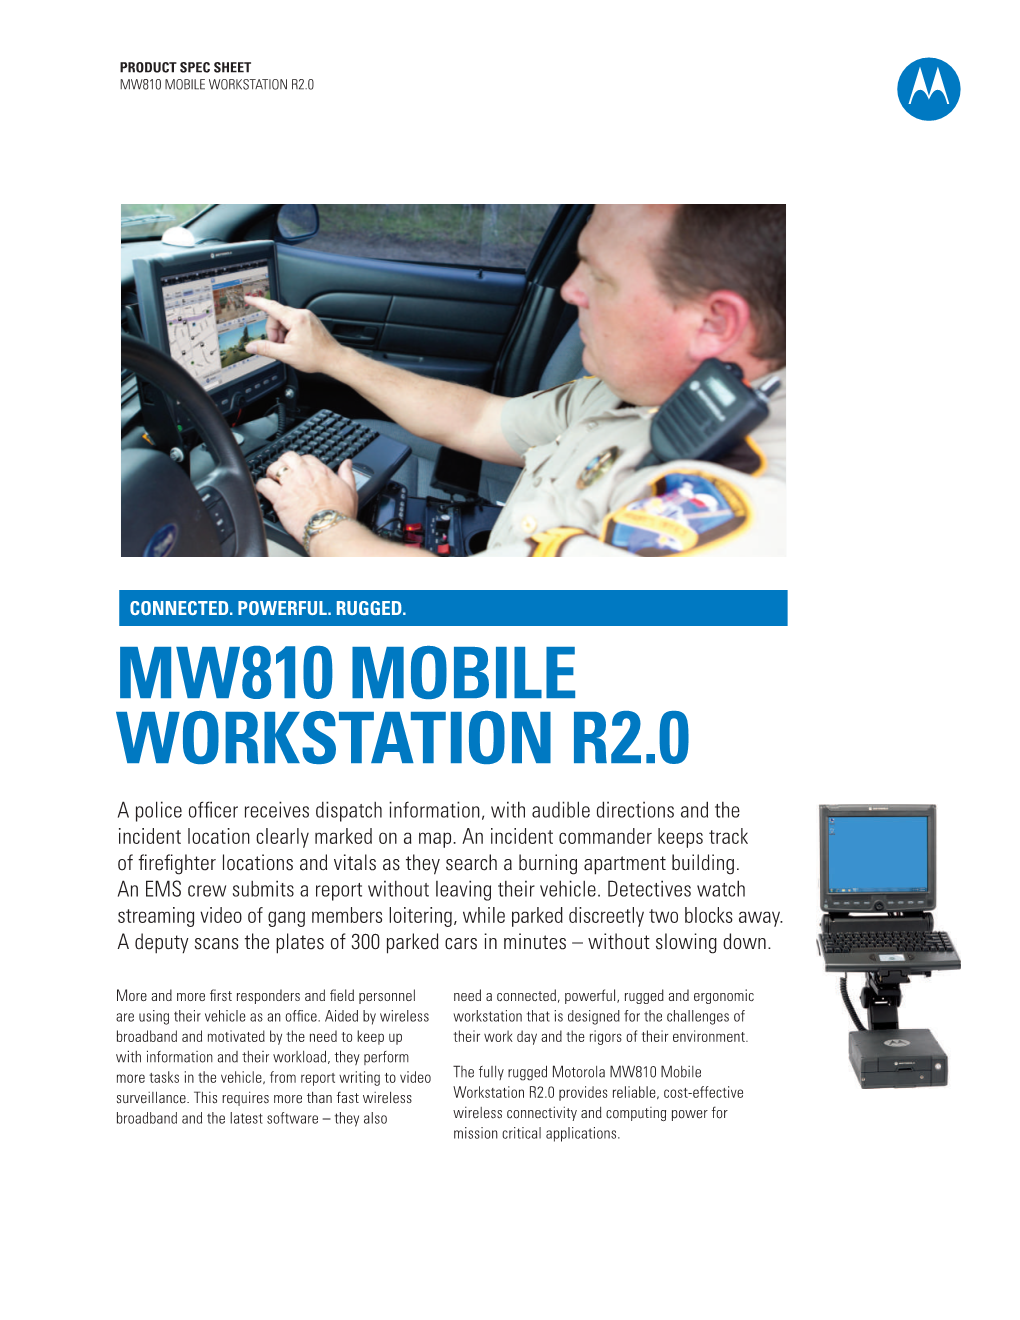 Mw810mobile Workstation R2.0